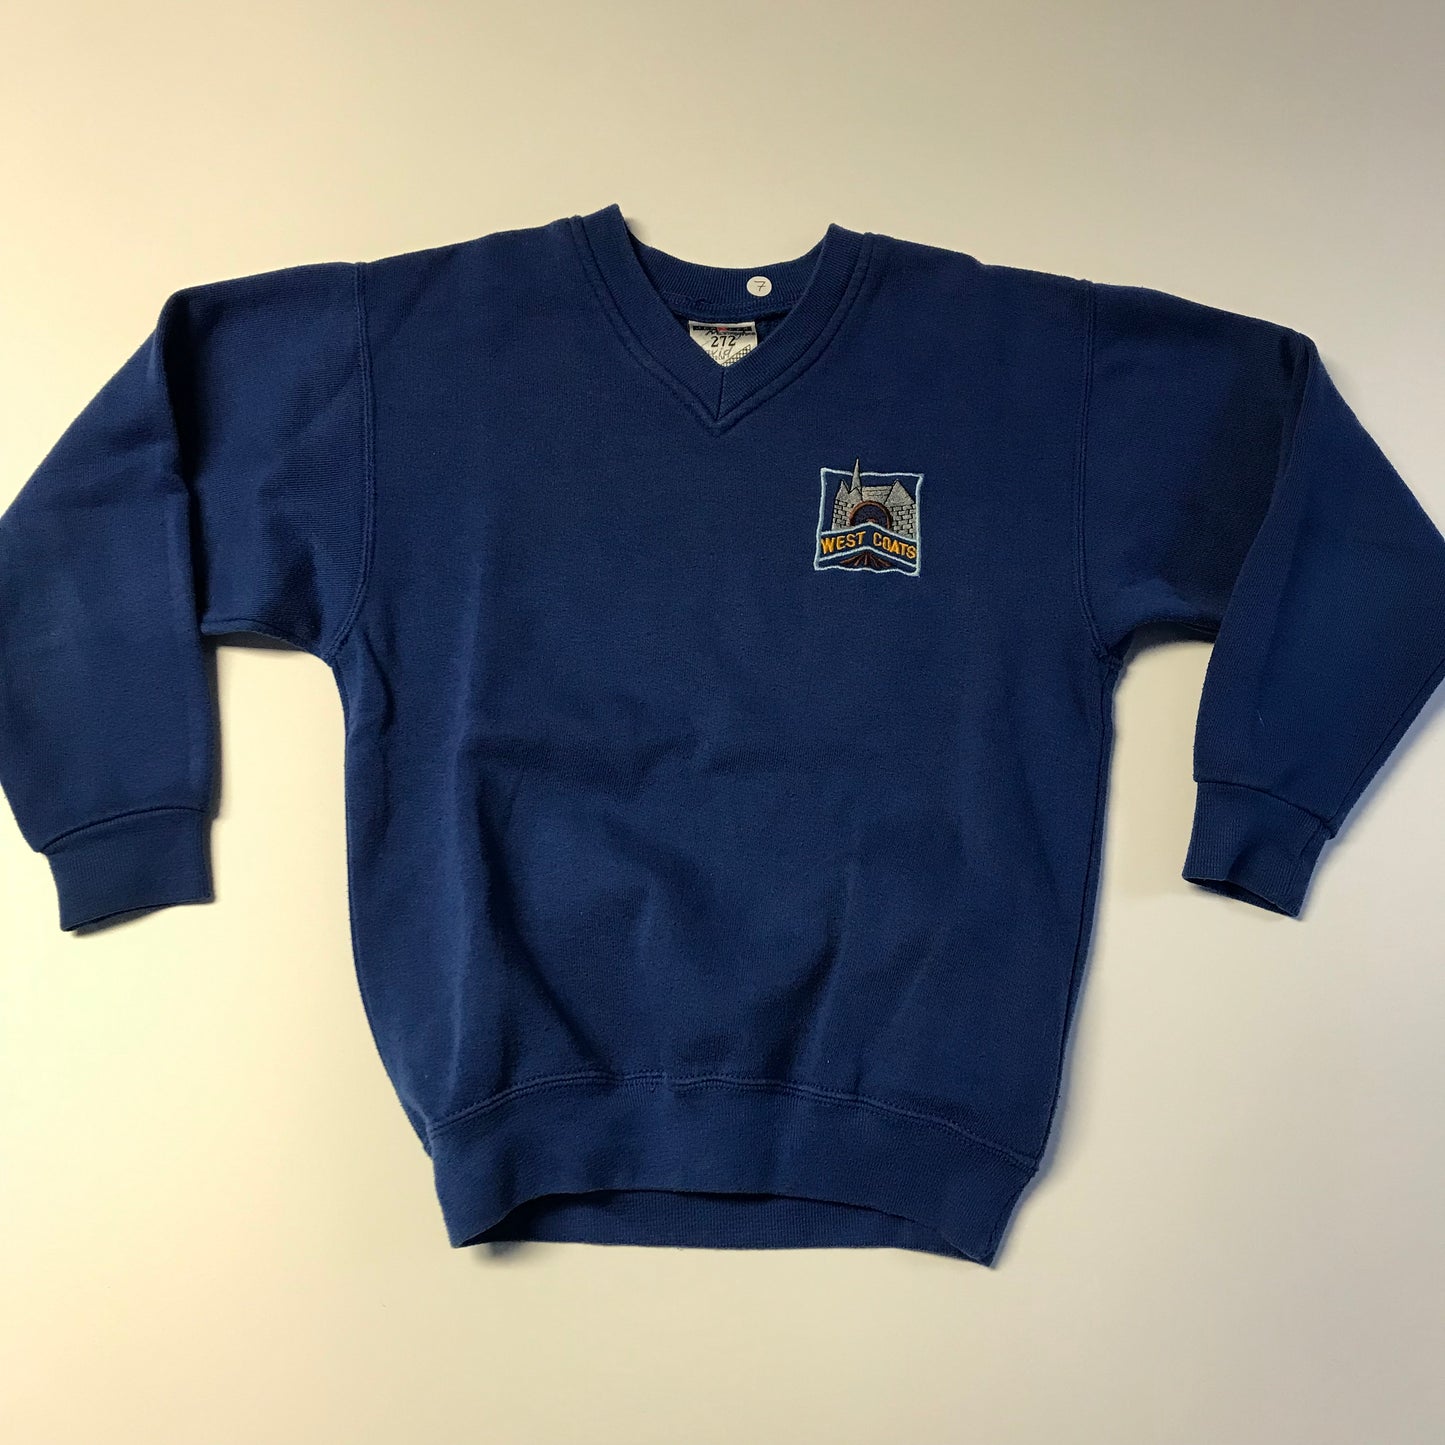 West Coats Primary Royal Blue Sweatshirt V-neck